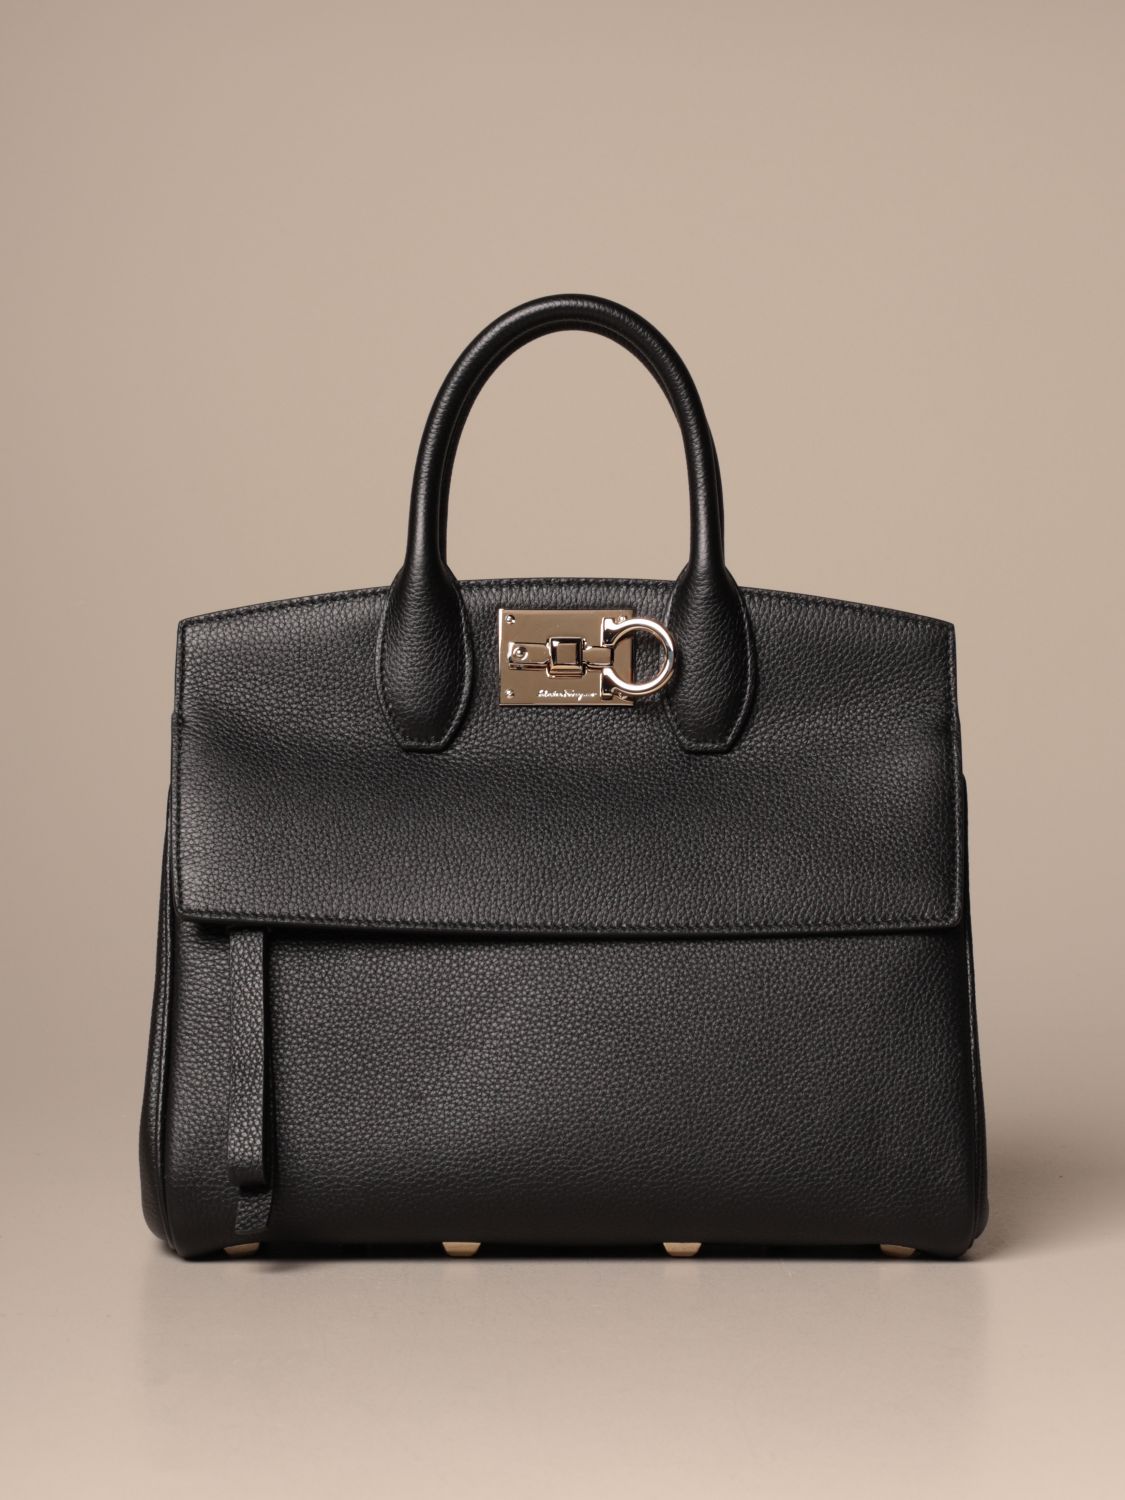 FERRAGAMO: Studio bag in textured leather - Black | Ferragamo handbag ...